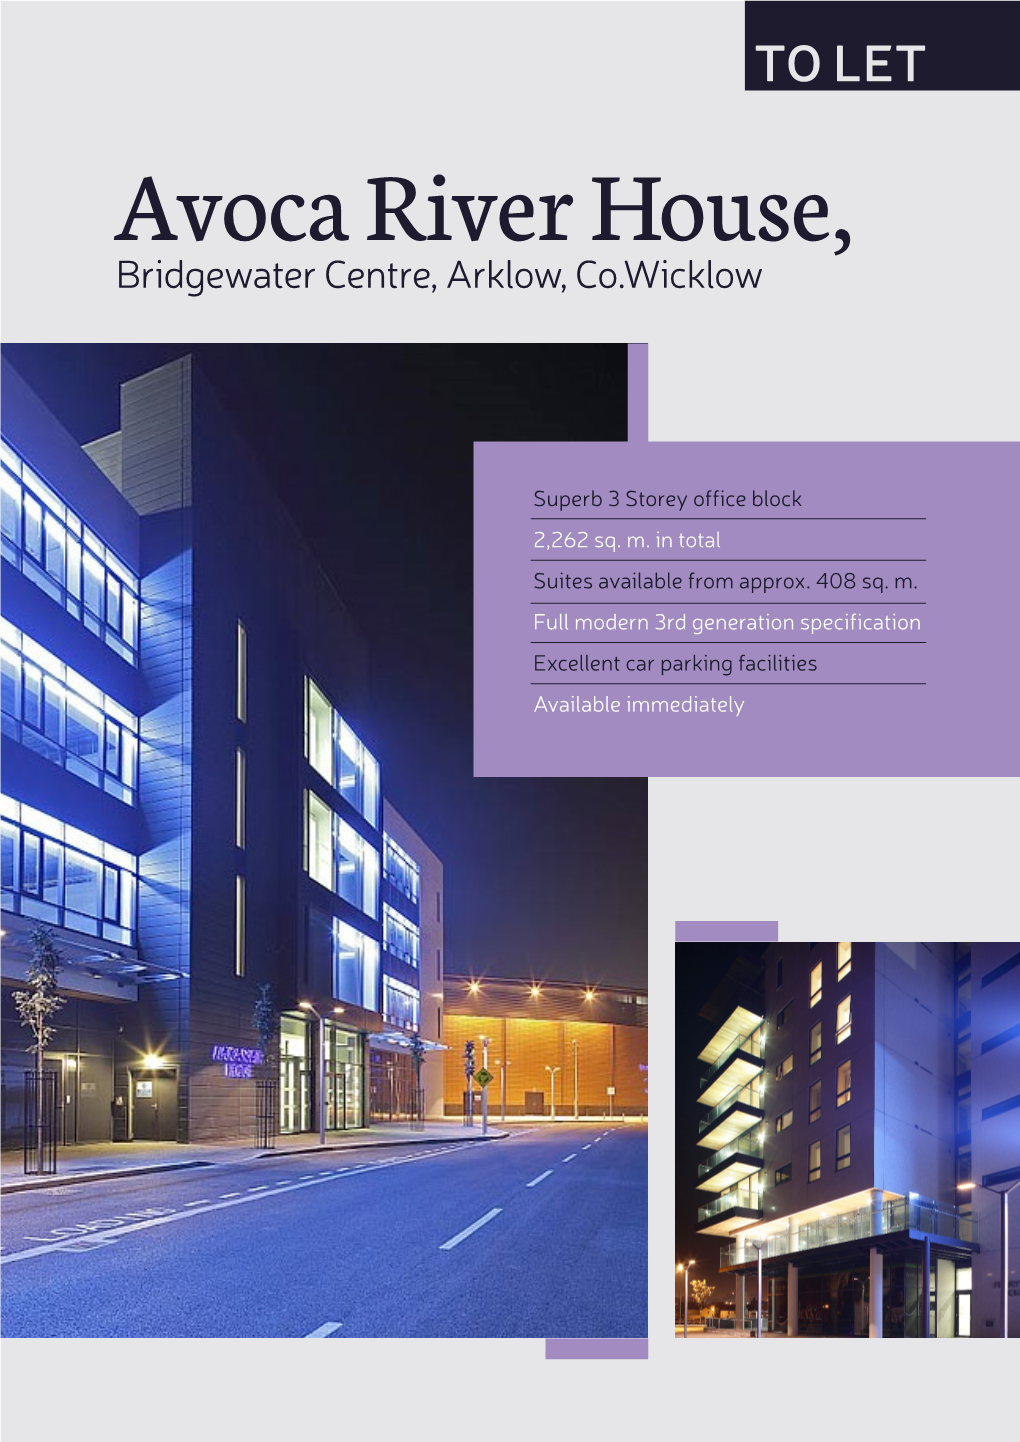 Avoca River House, Bridgewater Centre, Arklow, Co.Wicklow